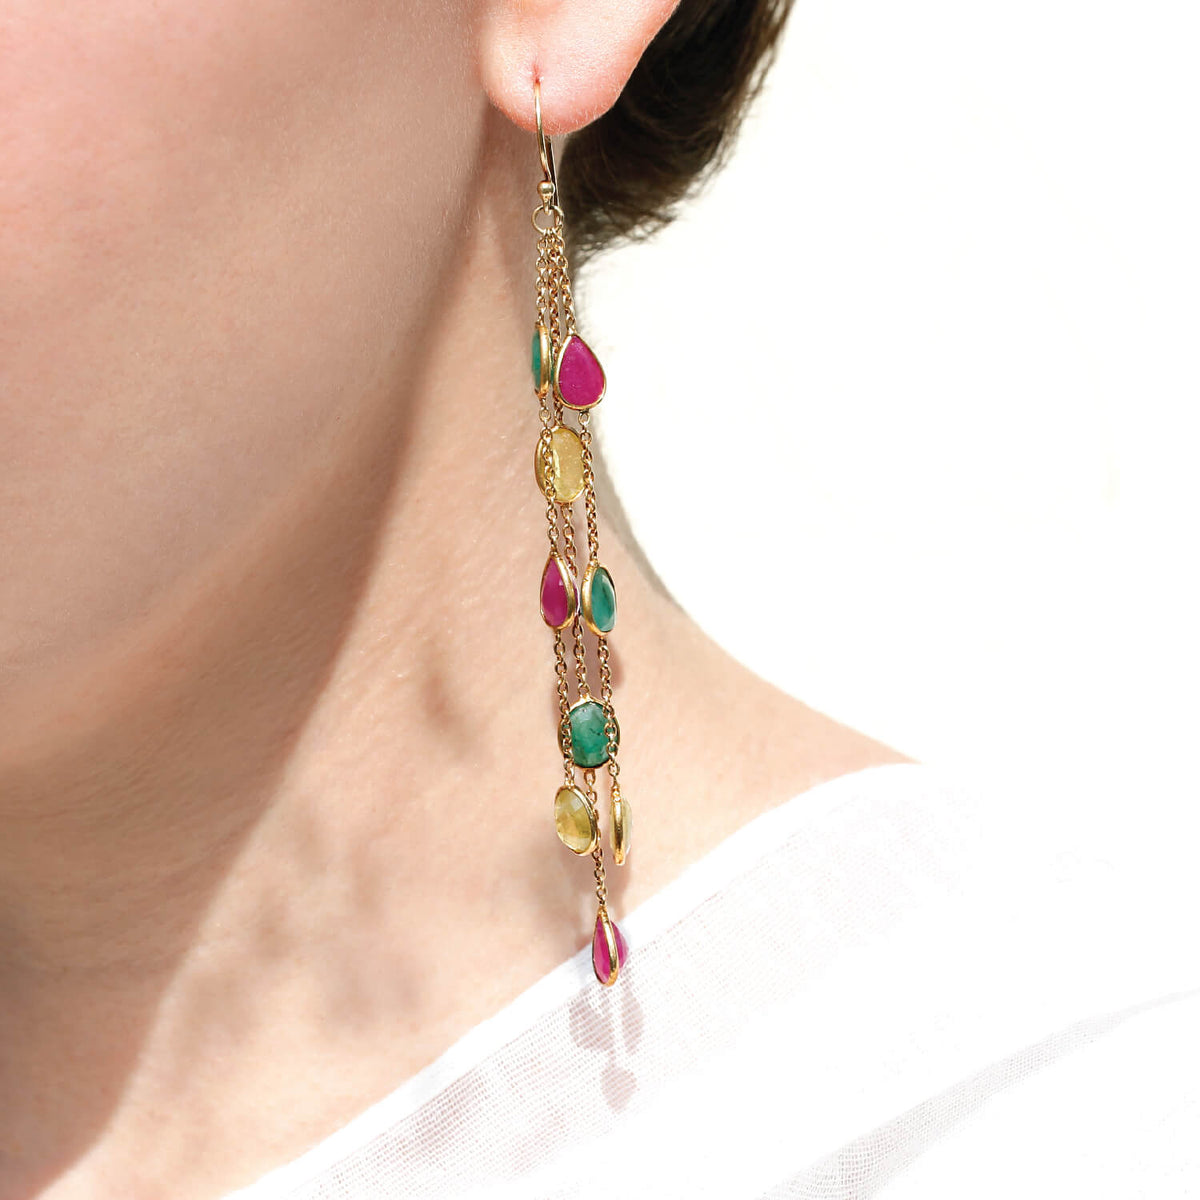 Henrik color stone earrings